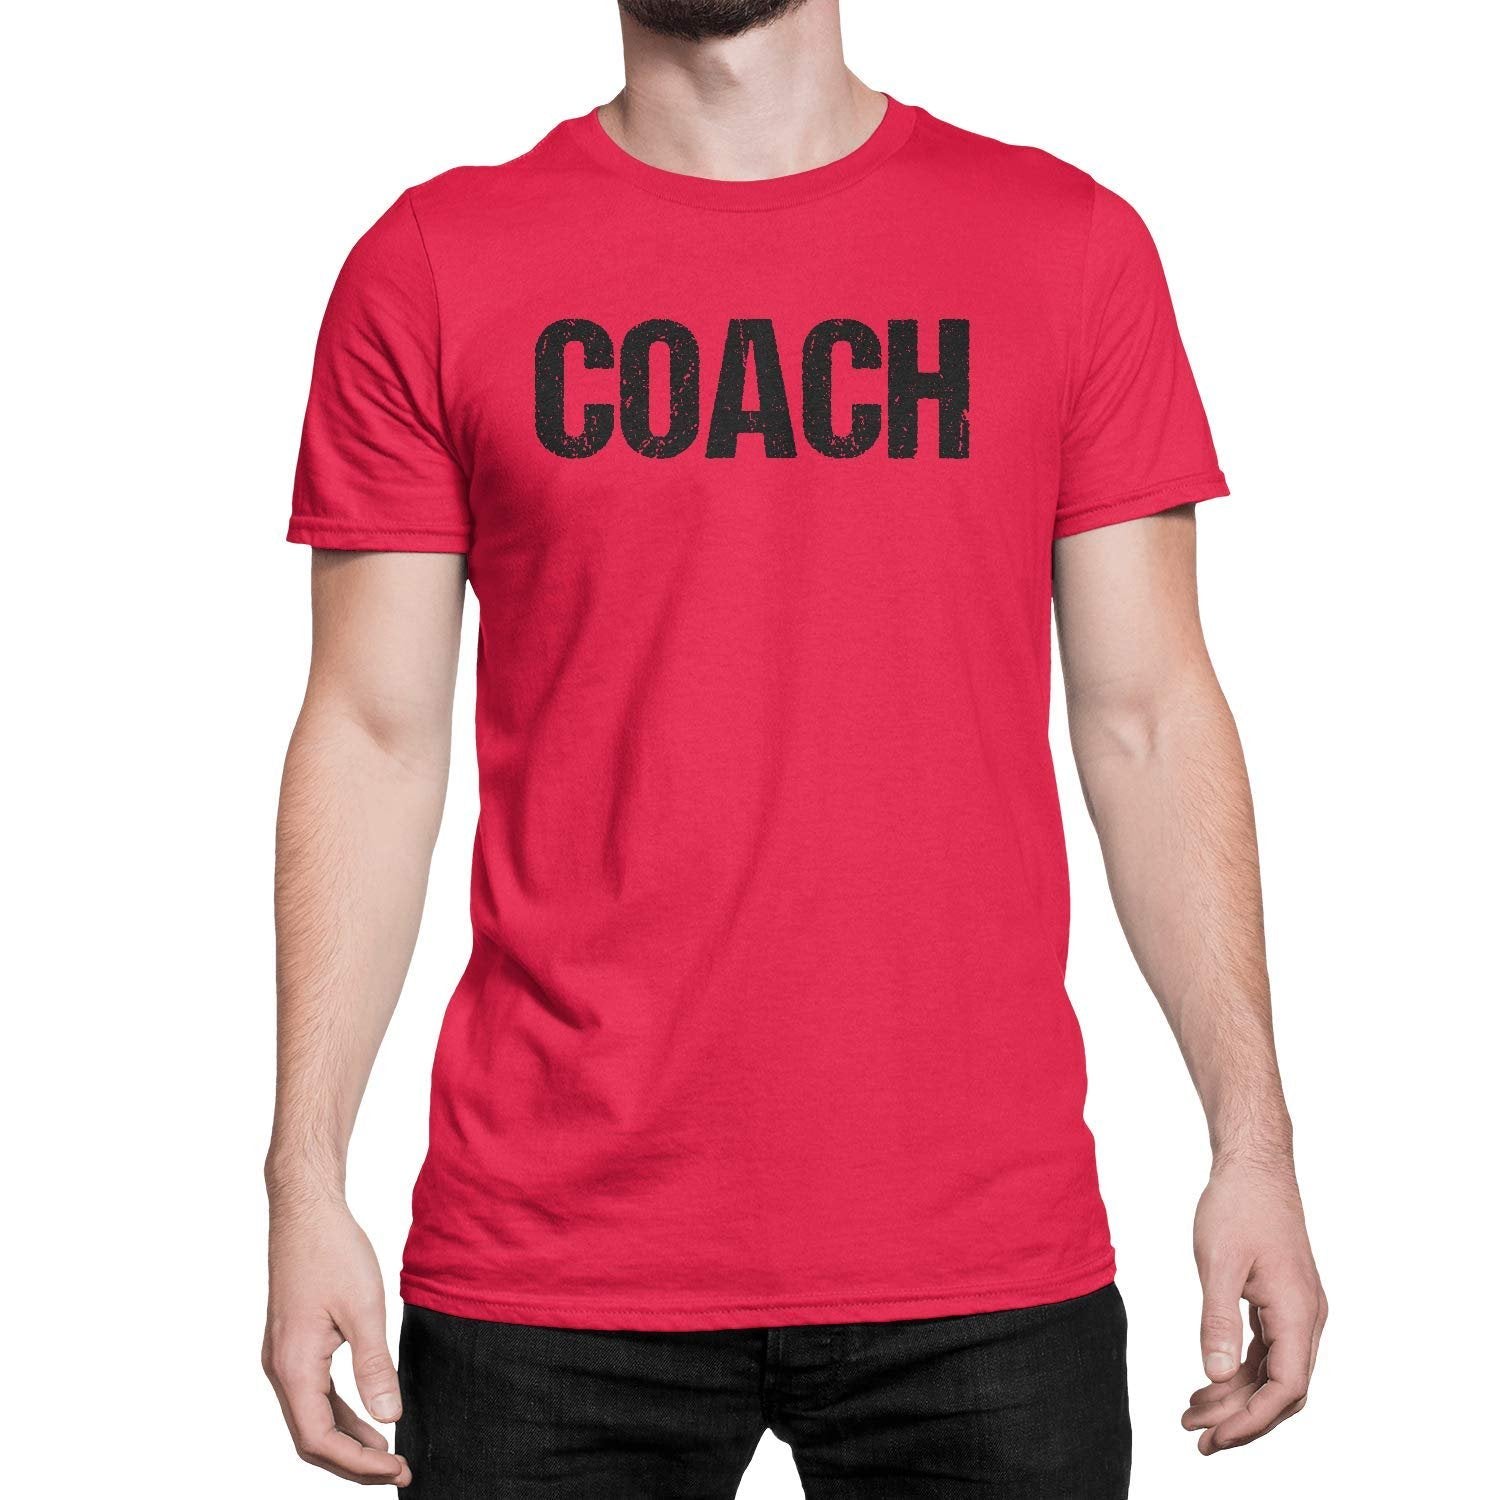 Coach T-Shirt Sports Coaching Tee Shirt (Red & Black, Distressed)